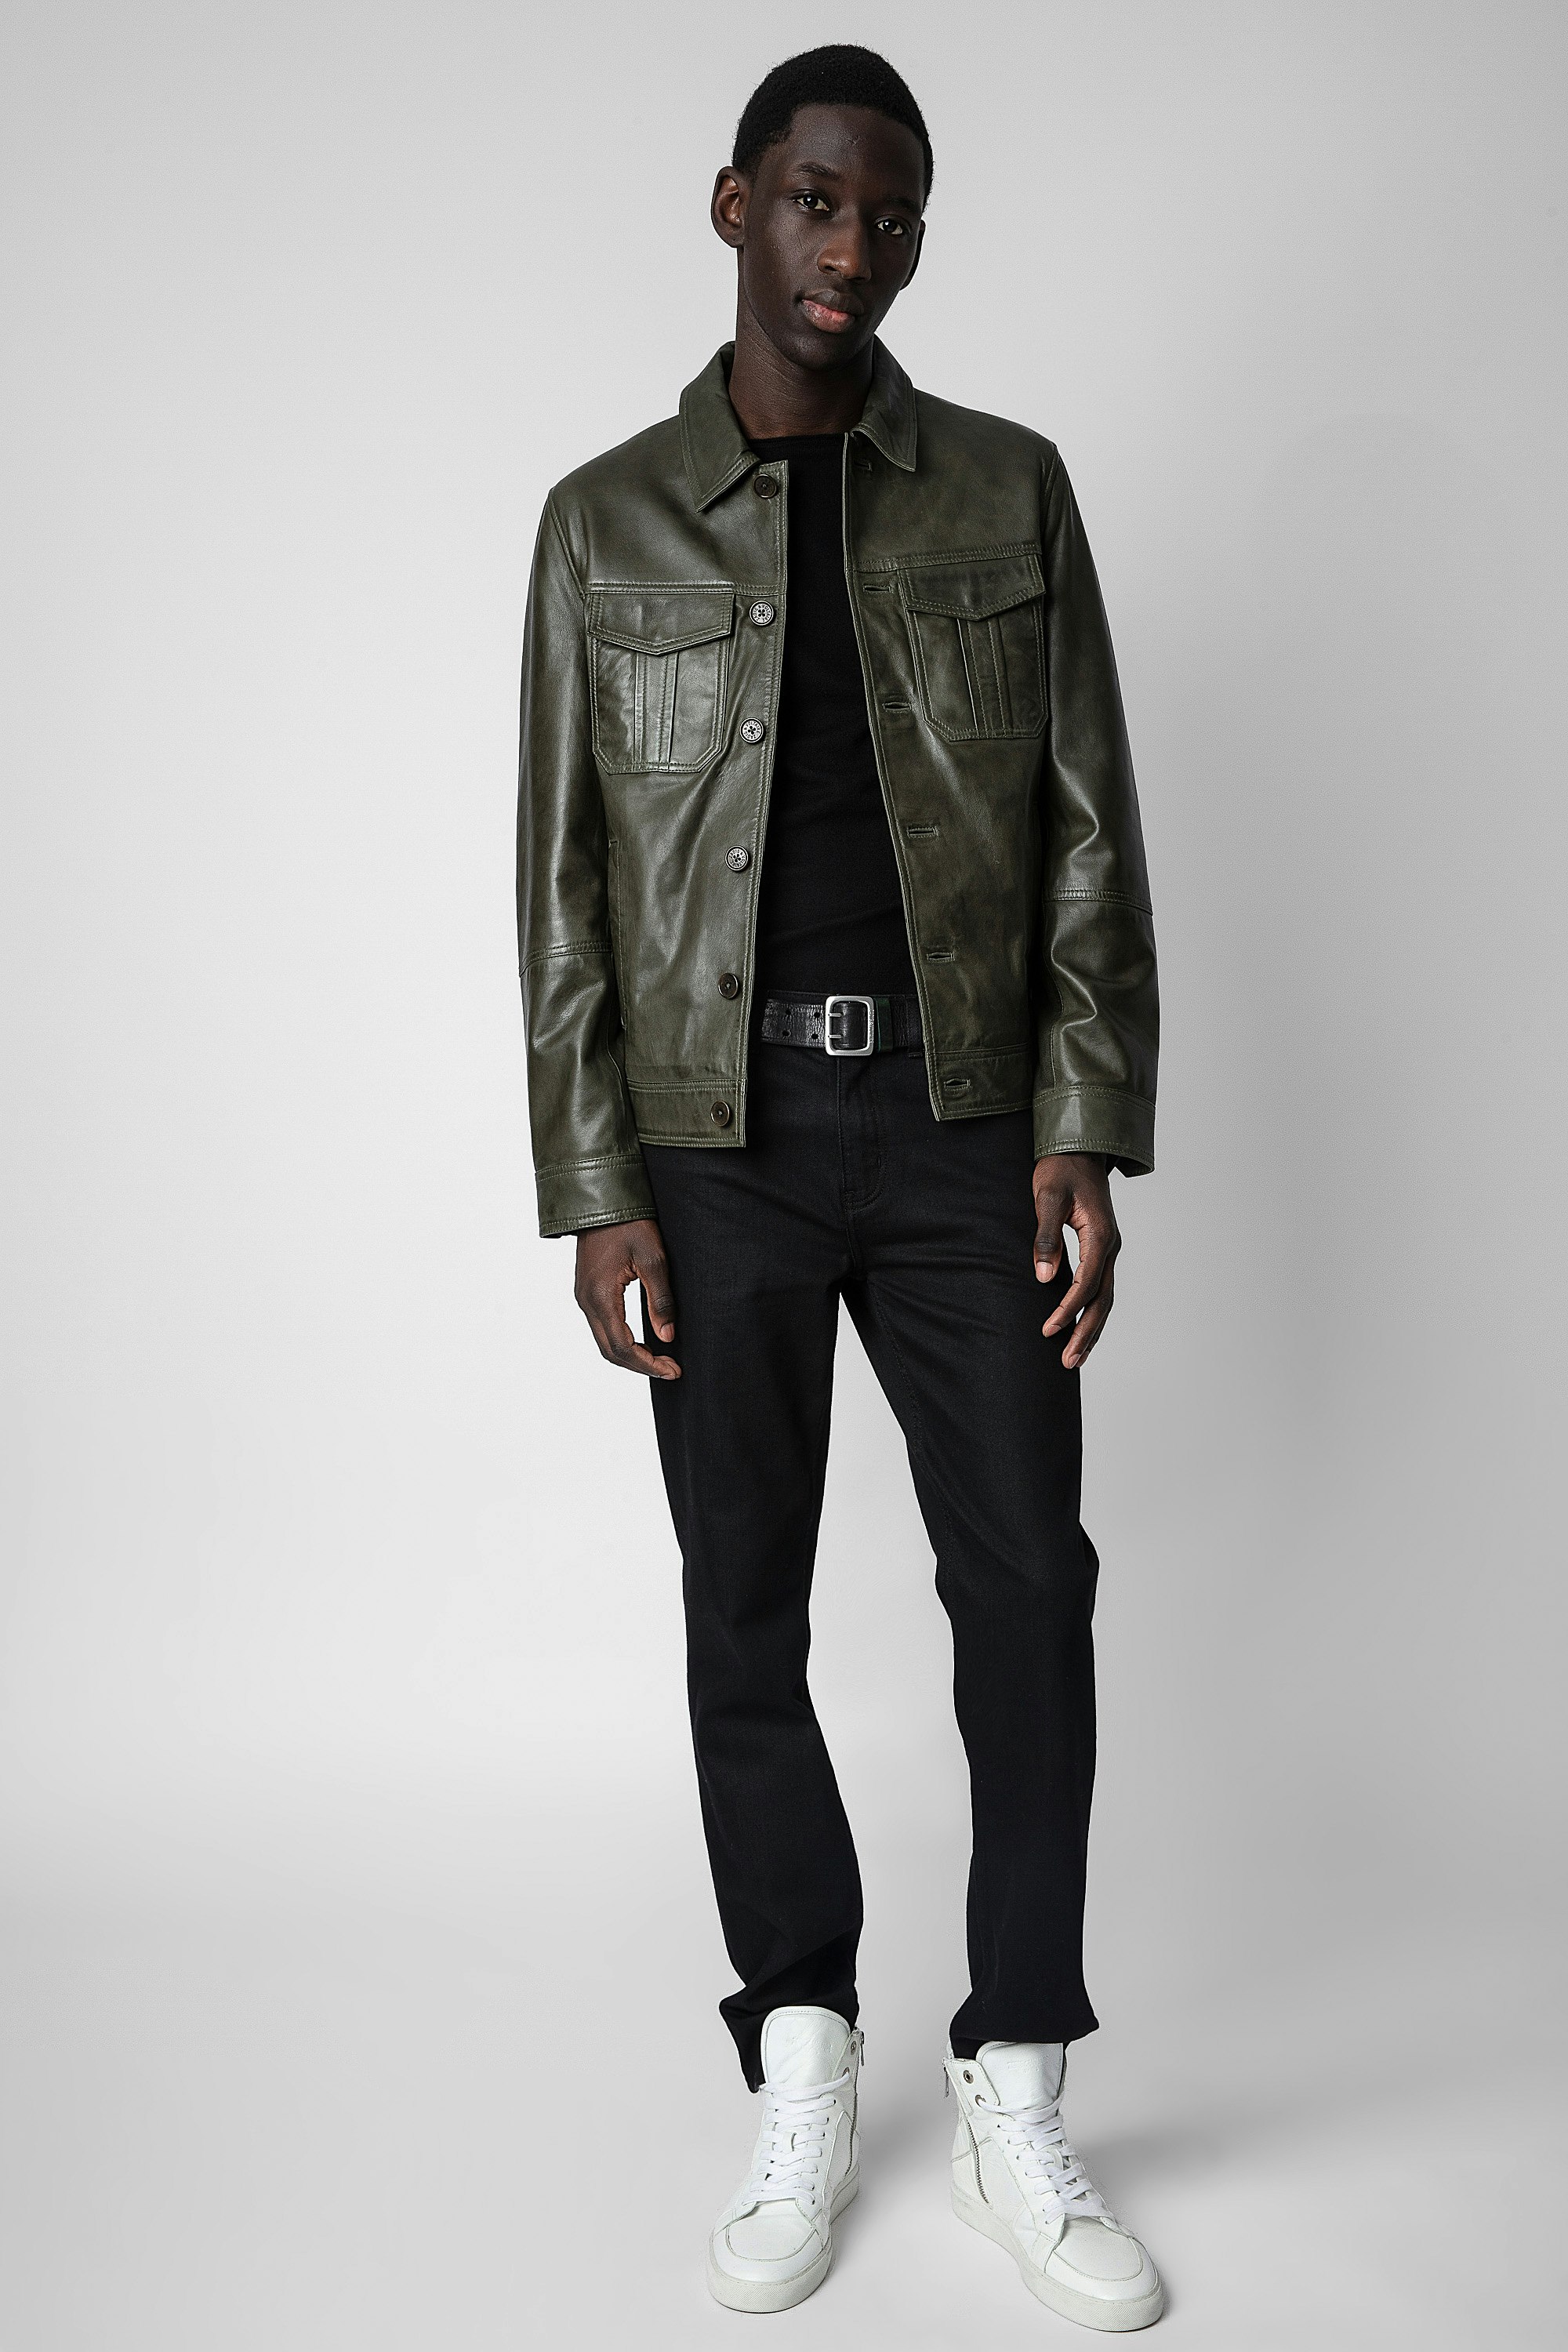 Lasso Leather Jacket - Men's jacket in green leather